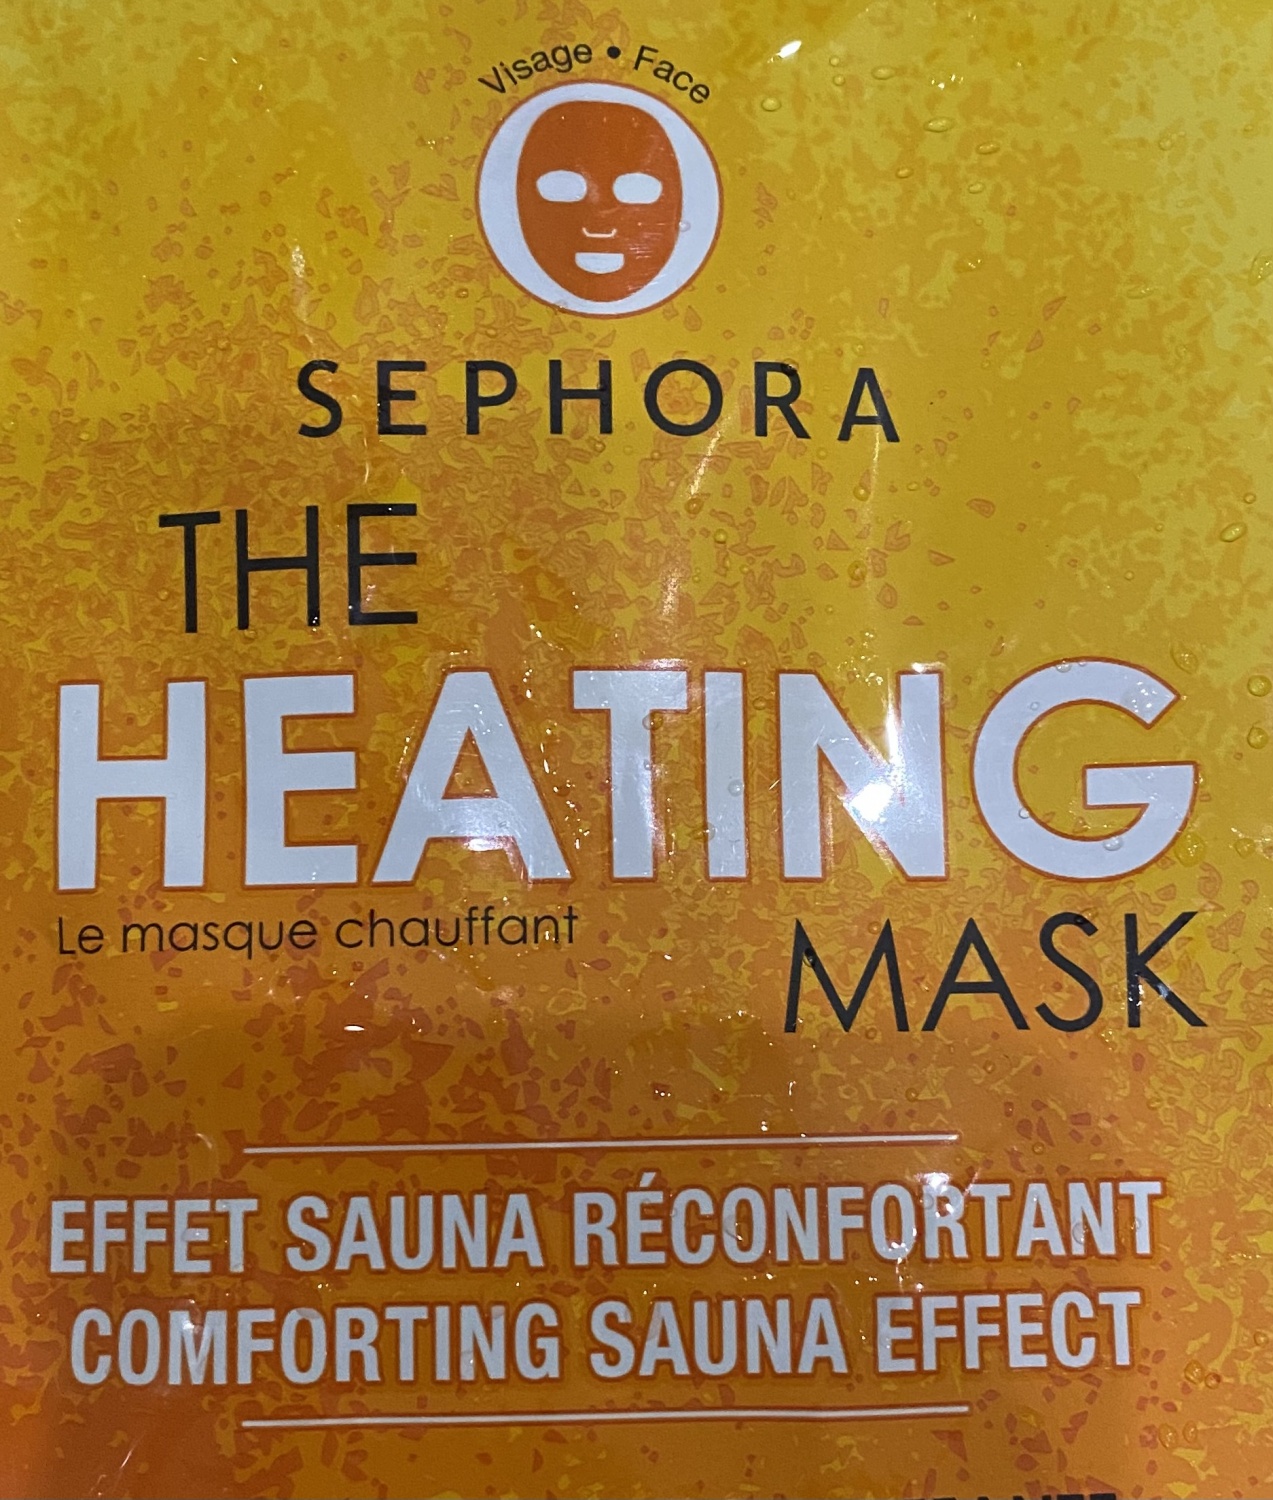 Маска для лица Sephora Heating mask фото